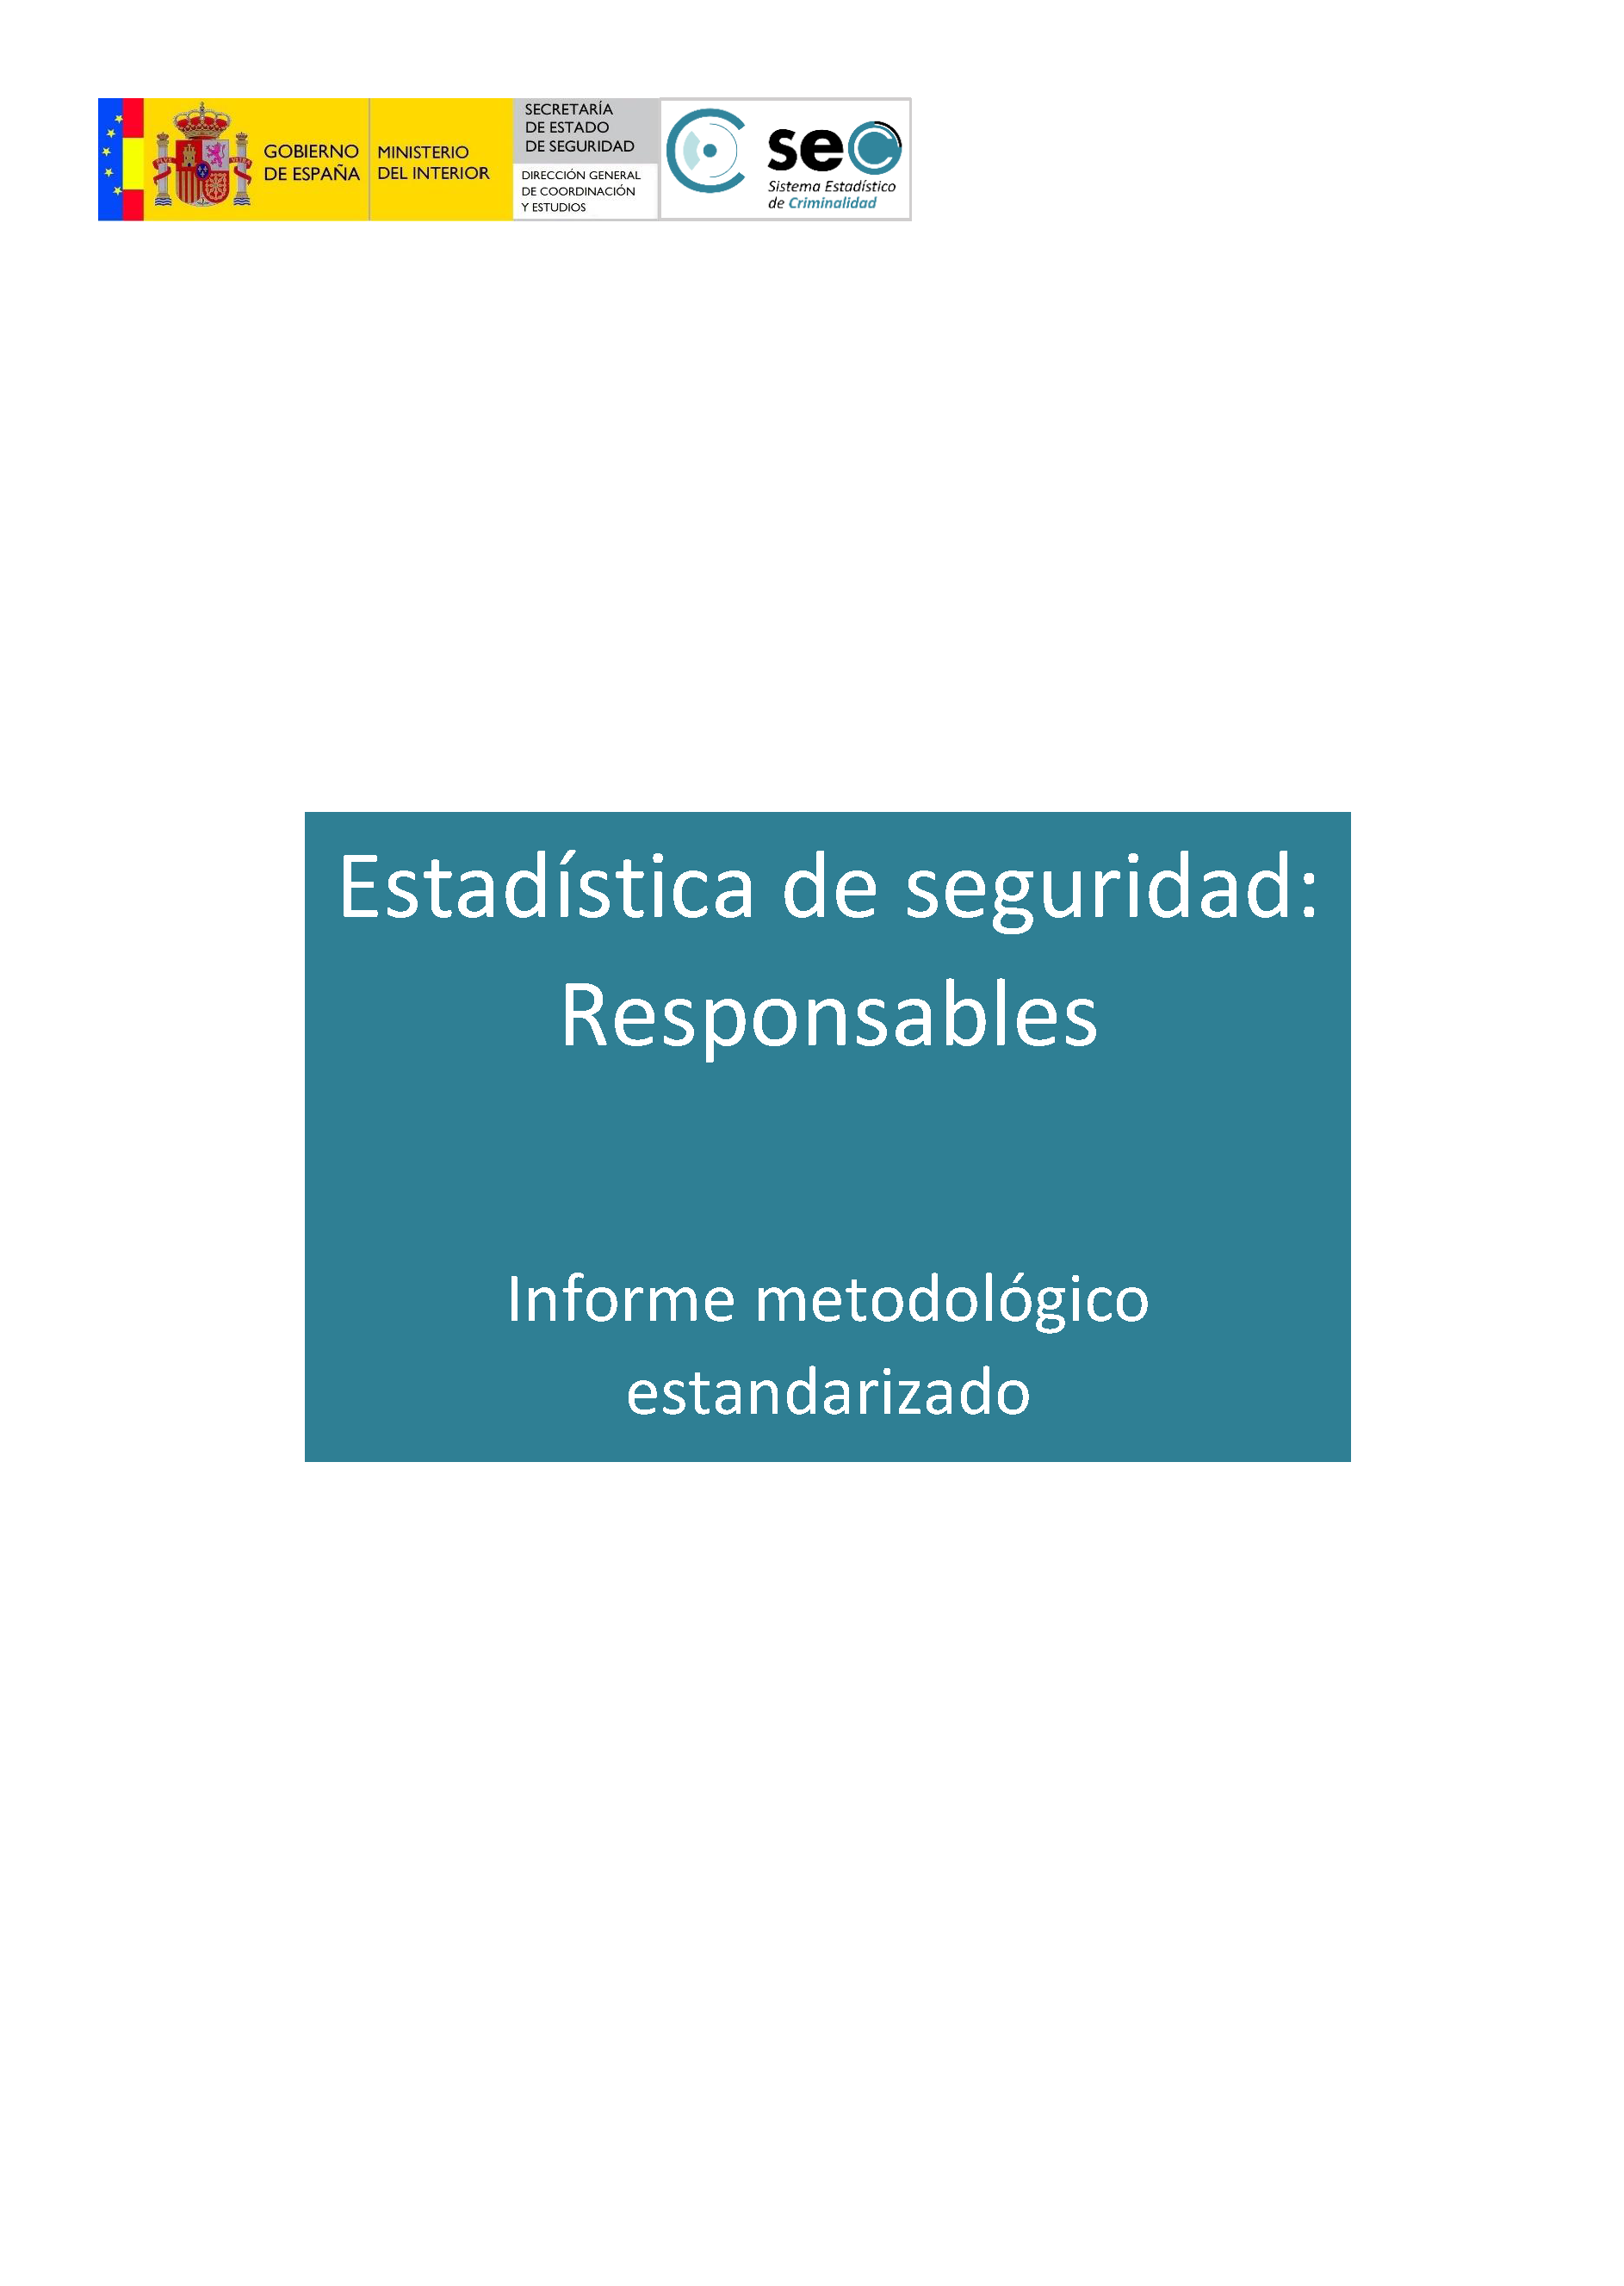 Standardized methodological report: responsible